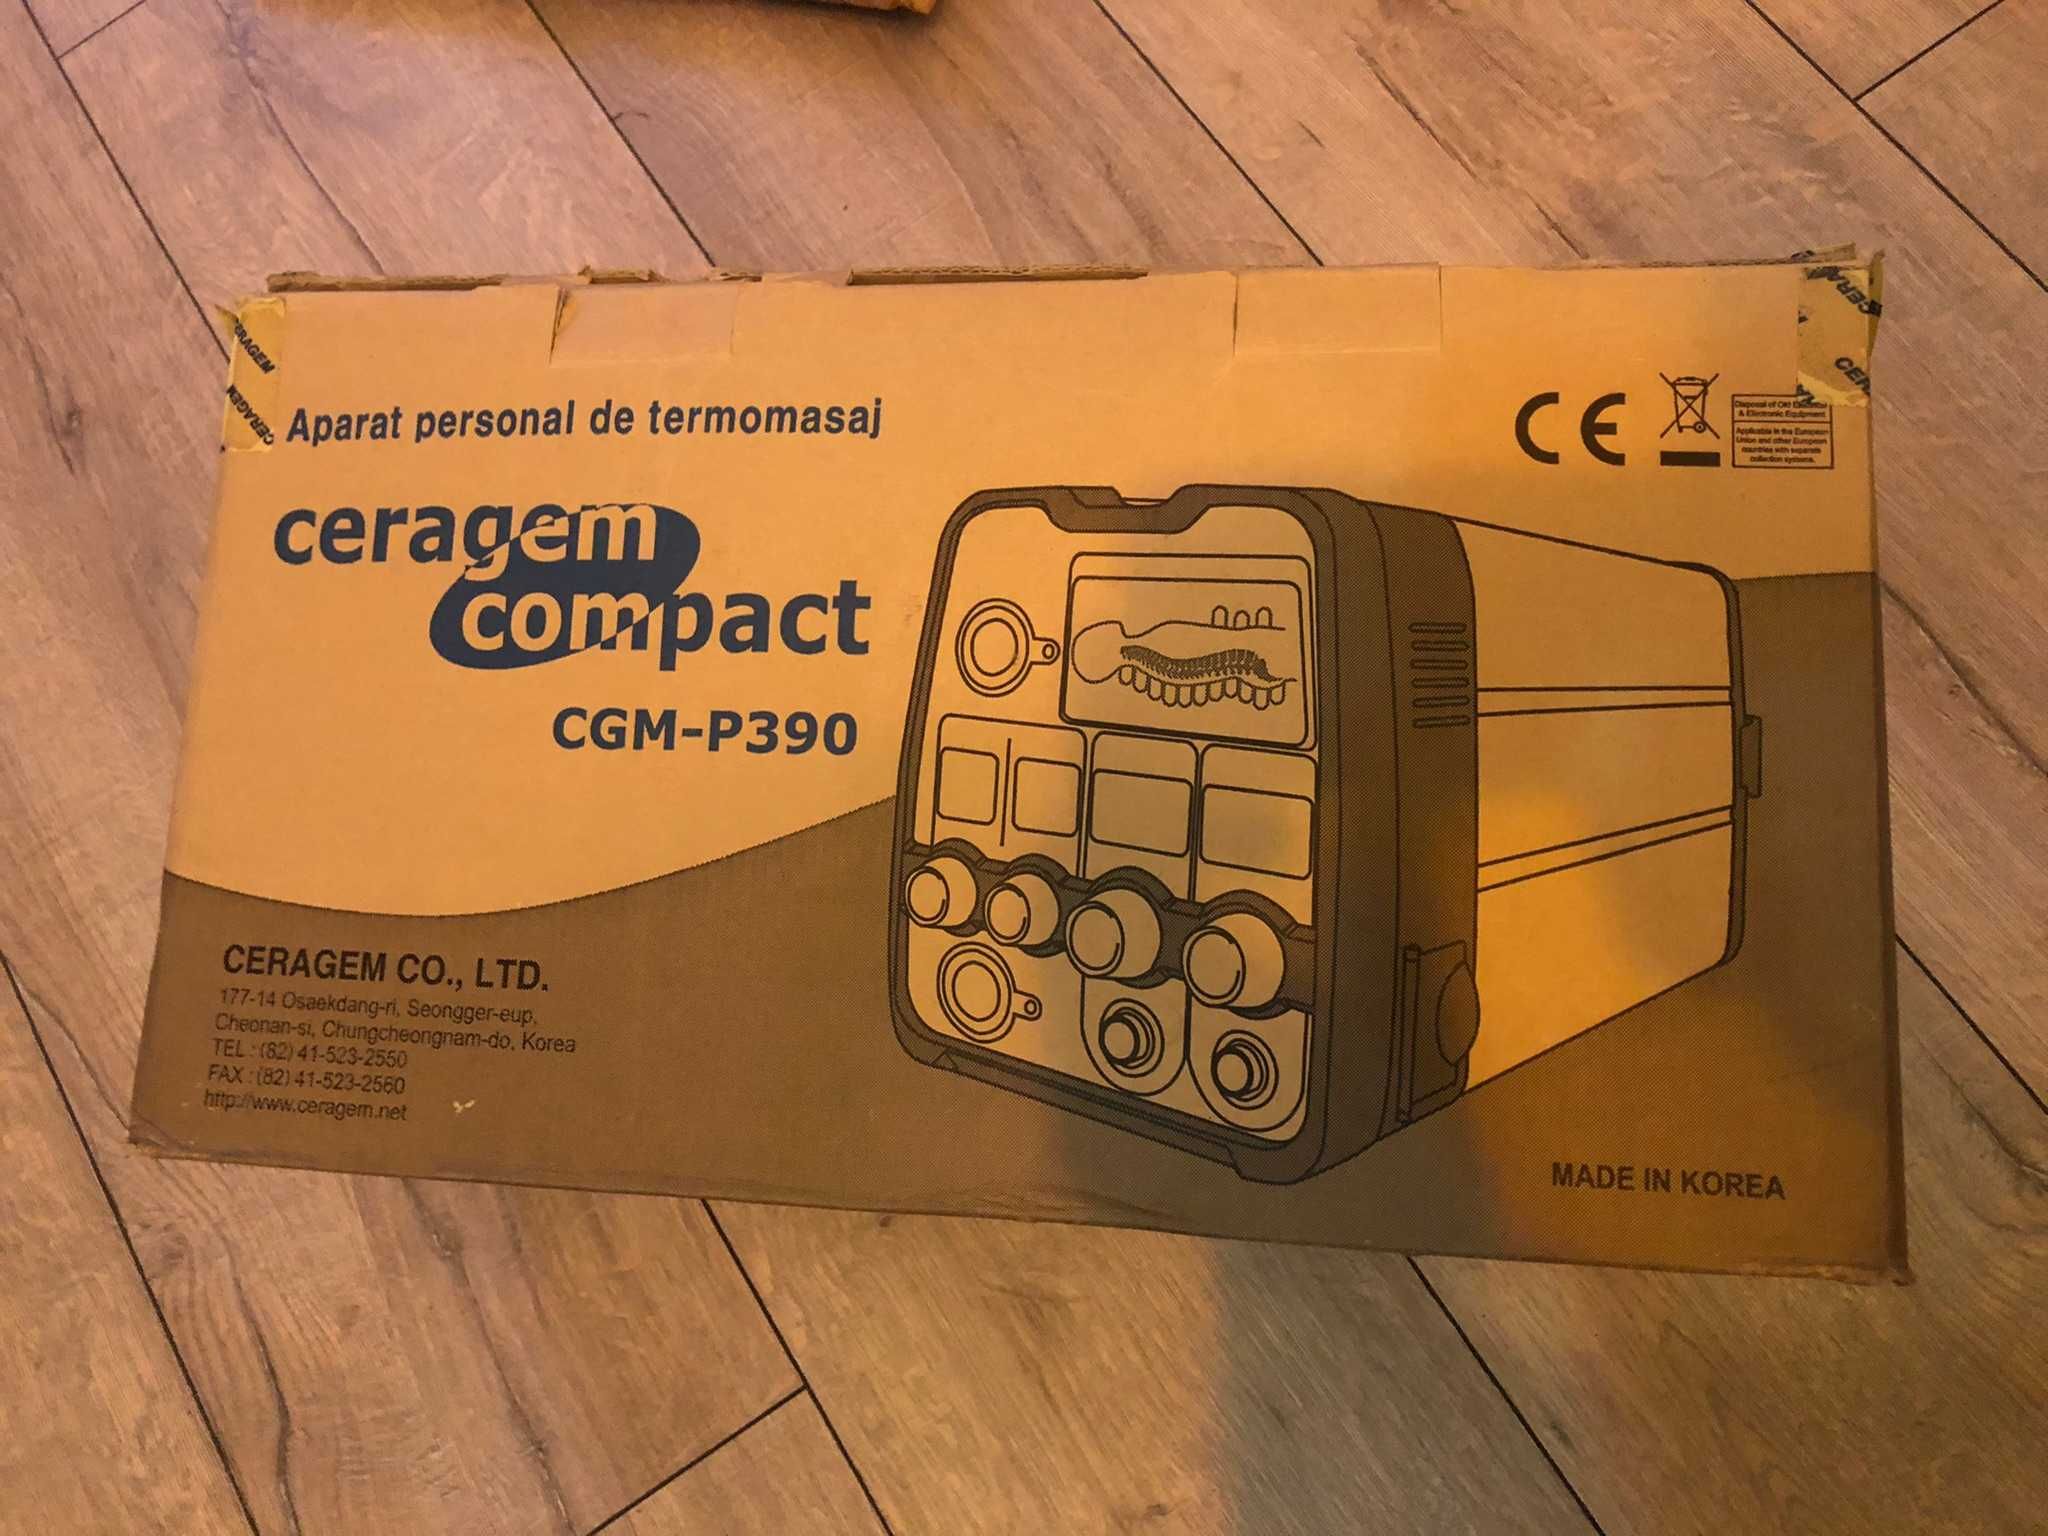 Ceragem Compact CGM-P390